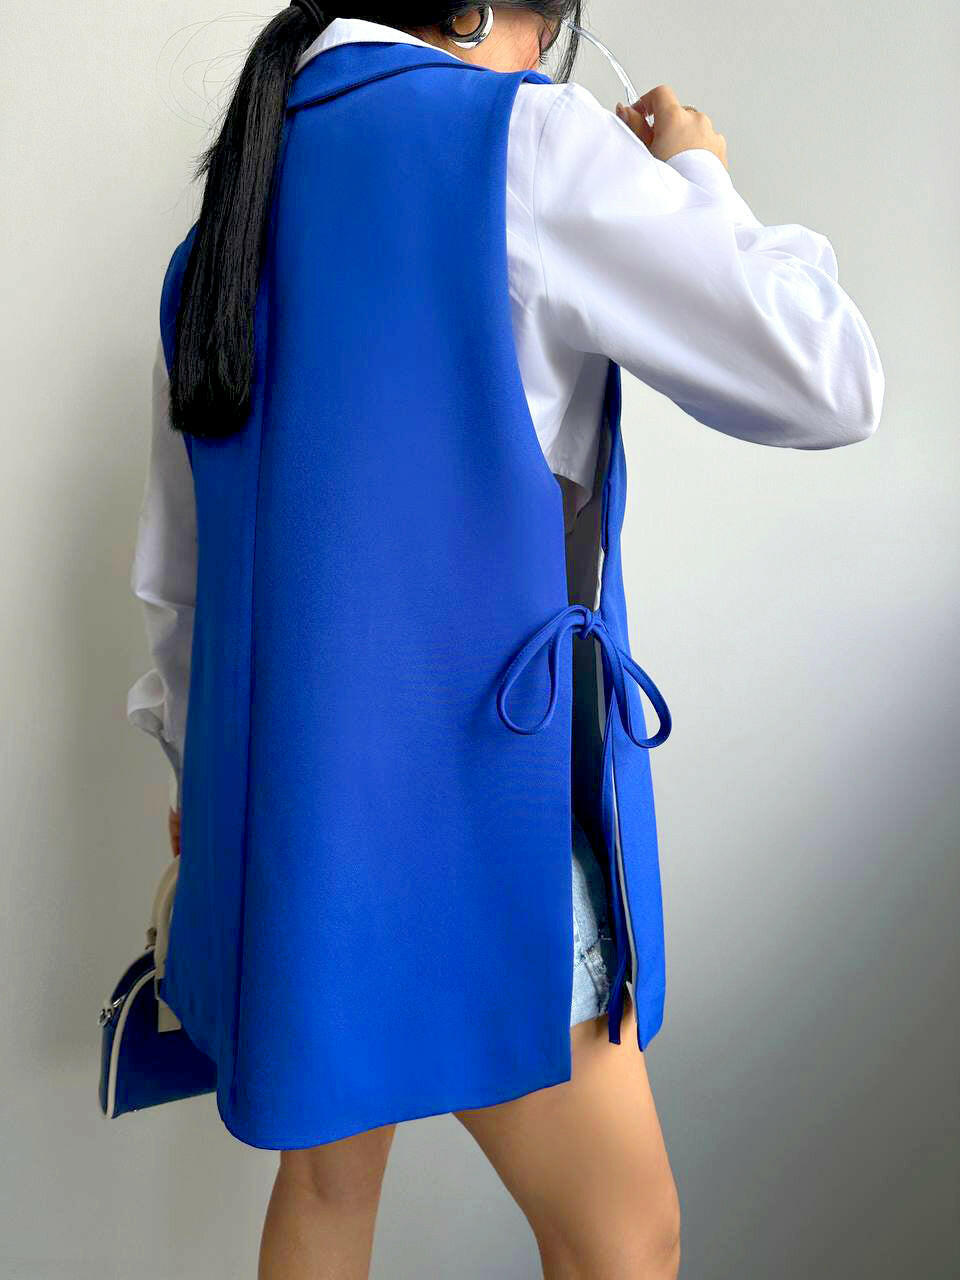 Sleeveless Blazer Vest with Side Tie Up in Blue - Noxlook